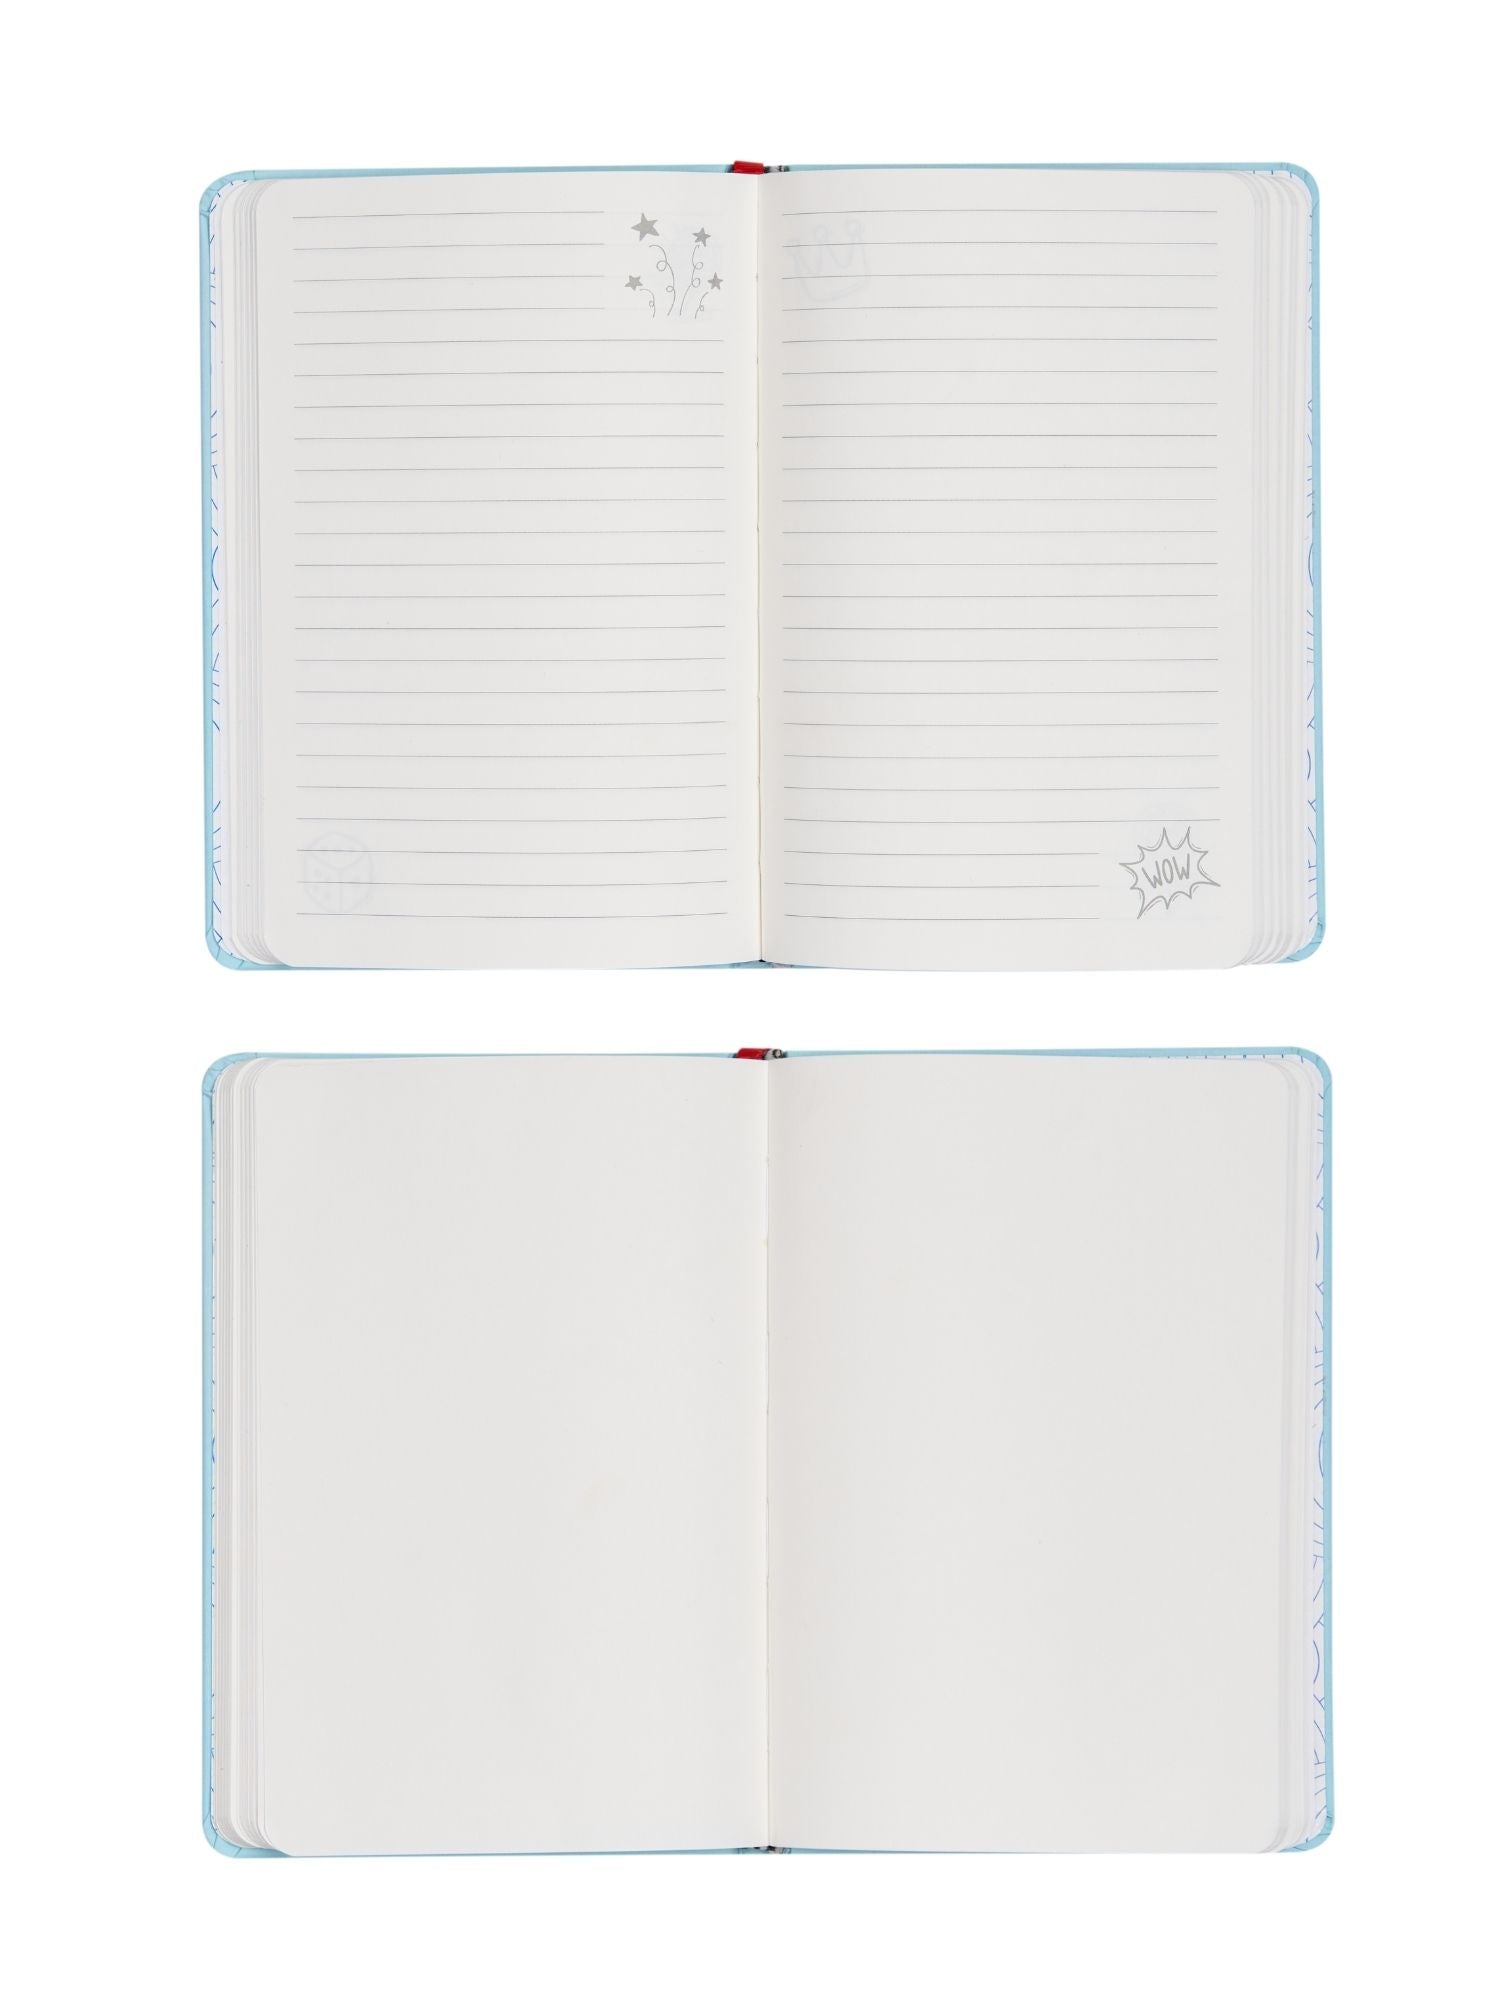 Doodle Initial Q Stripes Theme Premium Hard Bound B6 Notebook Diary